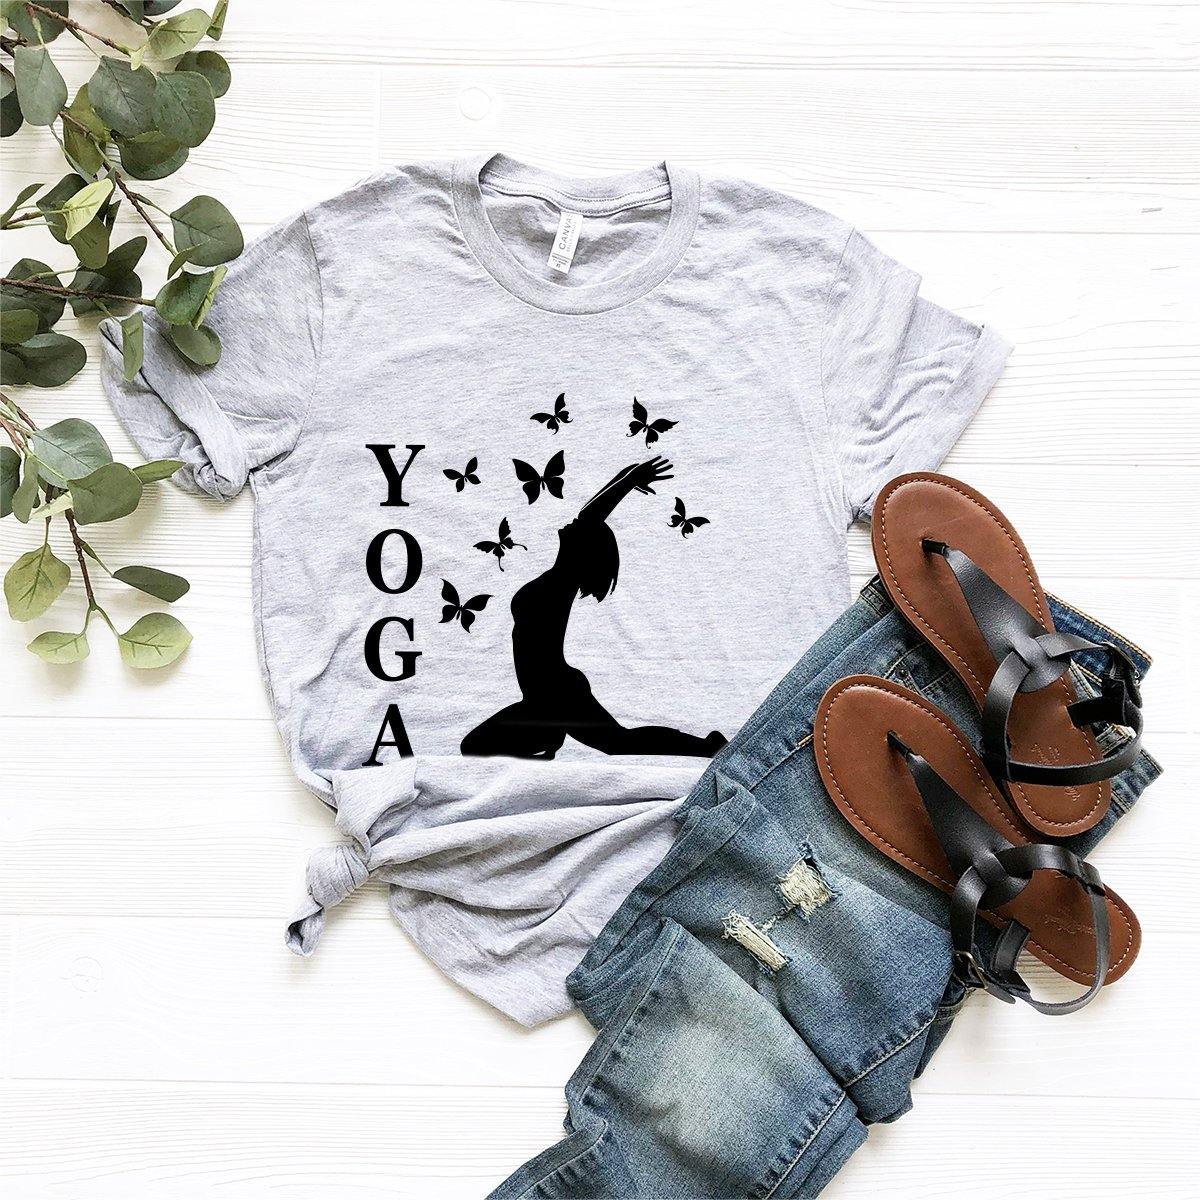 Yogi Women's T-Shirt, Yoga Lover Shirt, Yoga Shirt, Meditation Shirt, Yoga T-Shirt, Inspirational Shirt, Yoga Tee, Yoga Gift, Yoga Pose Tee - Fastdeliverytees.com